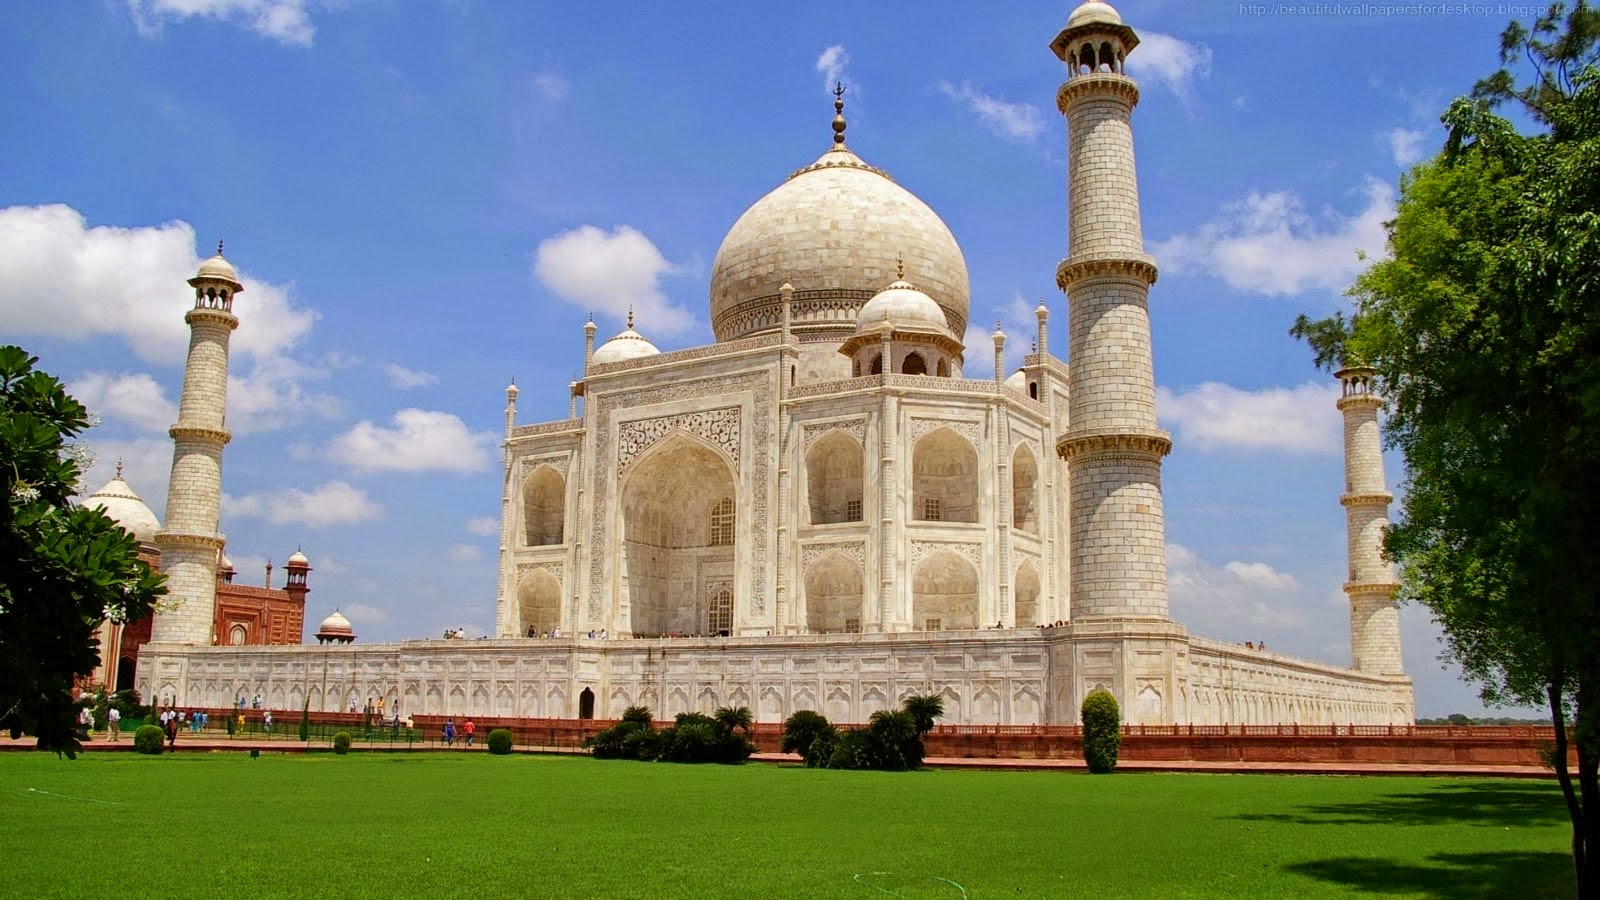 List of top 7 UNESCO world heritage sites in India